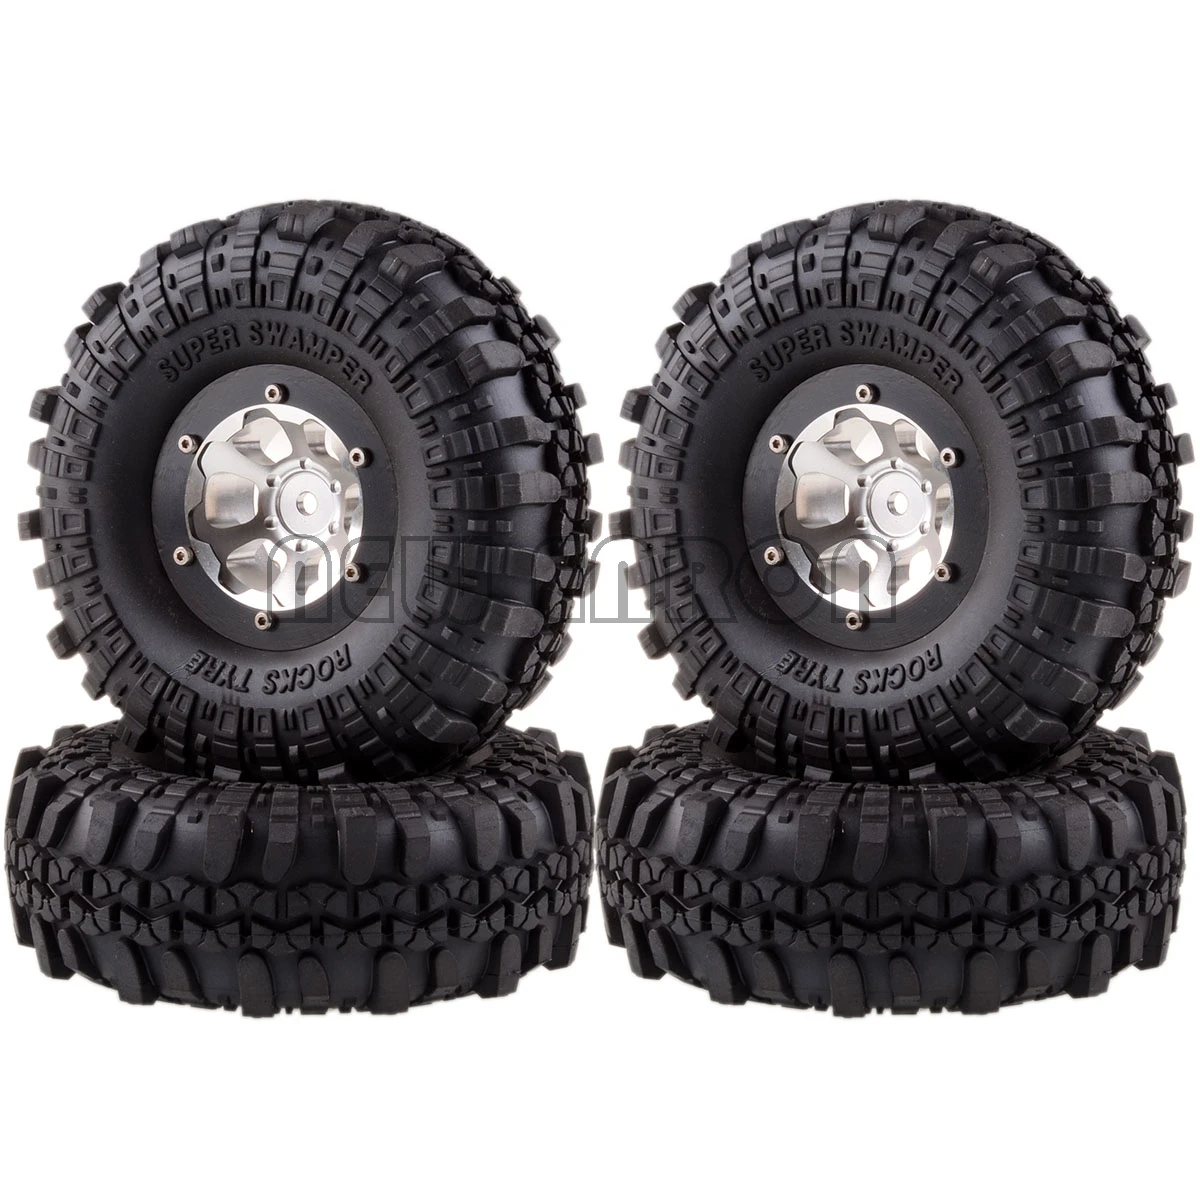 

NEW ENRON 4P 1.9" Metal Wheel Rims & Super Swamper Tyre Tires For RC 1/10 Rock Crawler MST jimny TRX4 SCX10 TF2 D90 D110